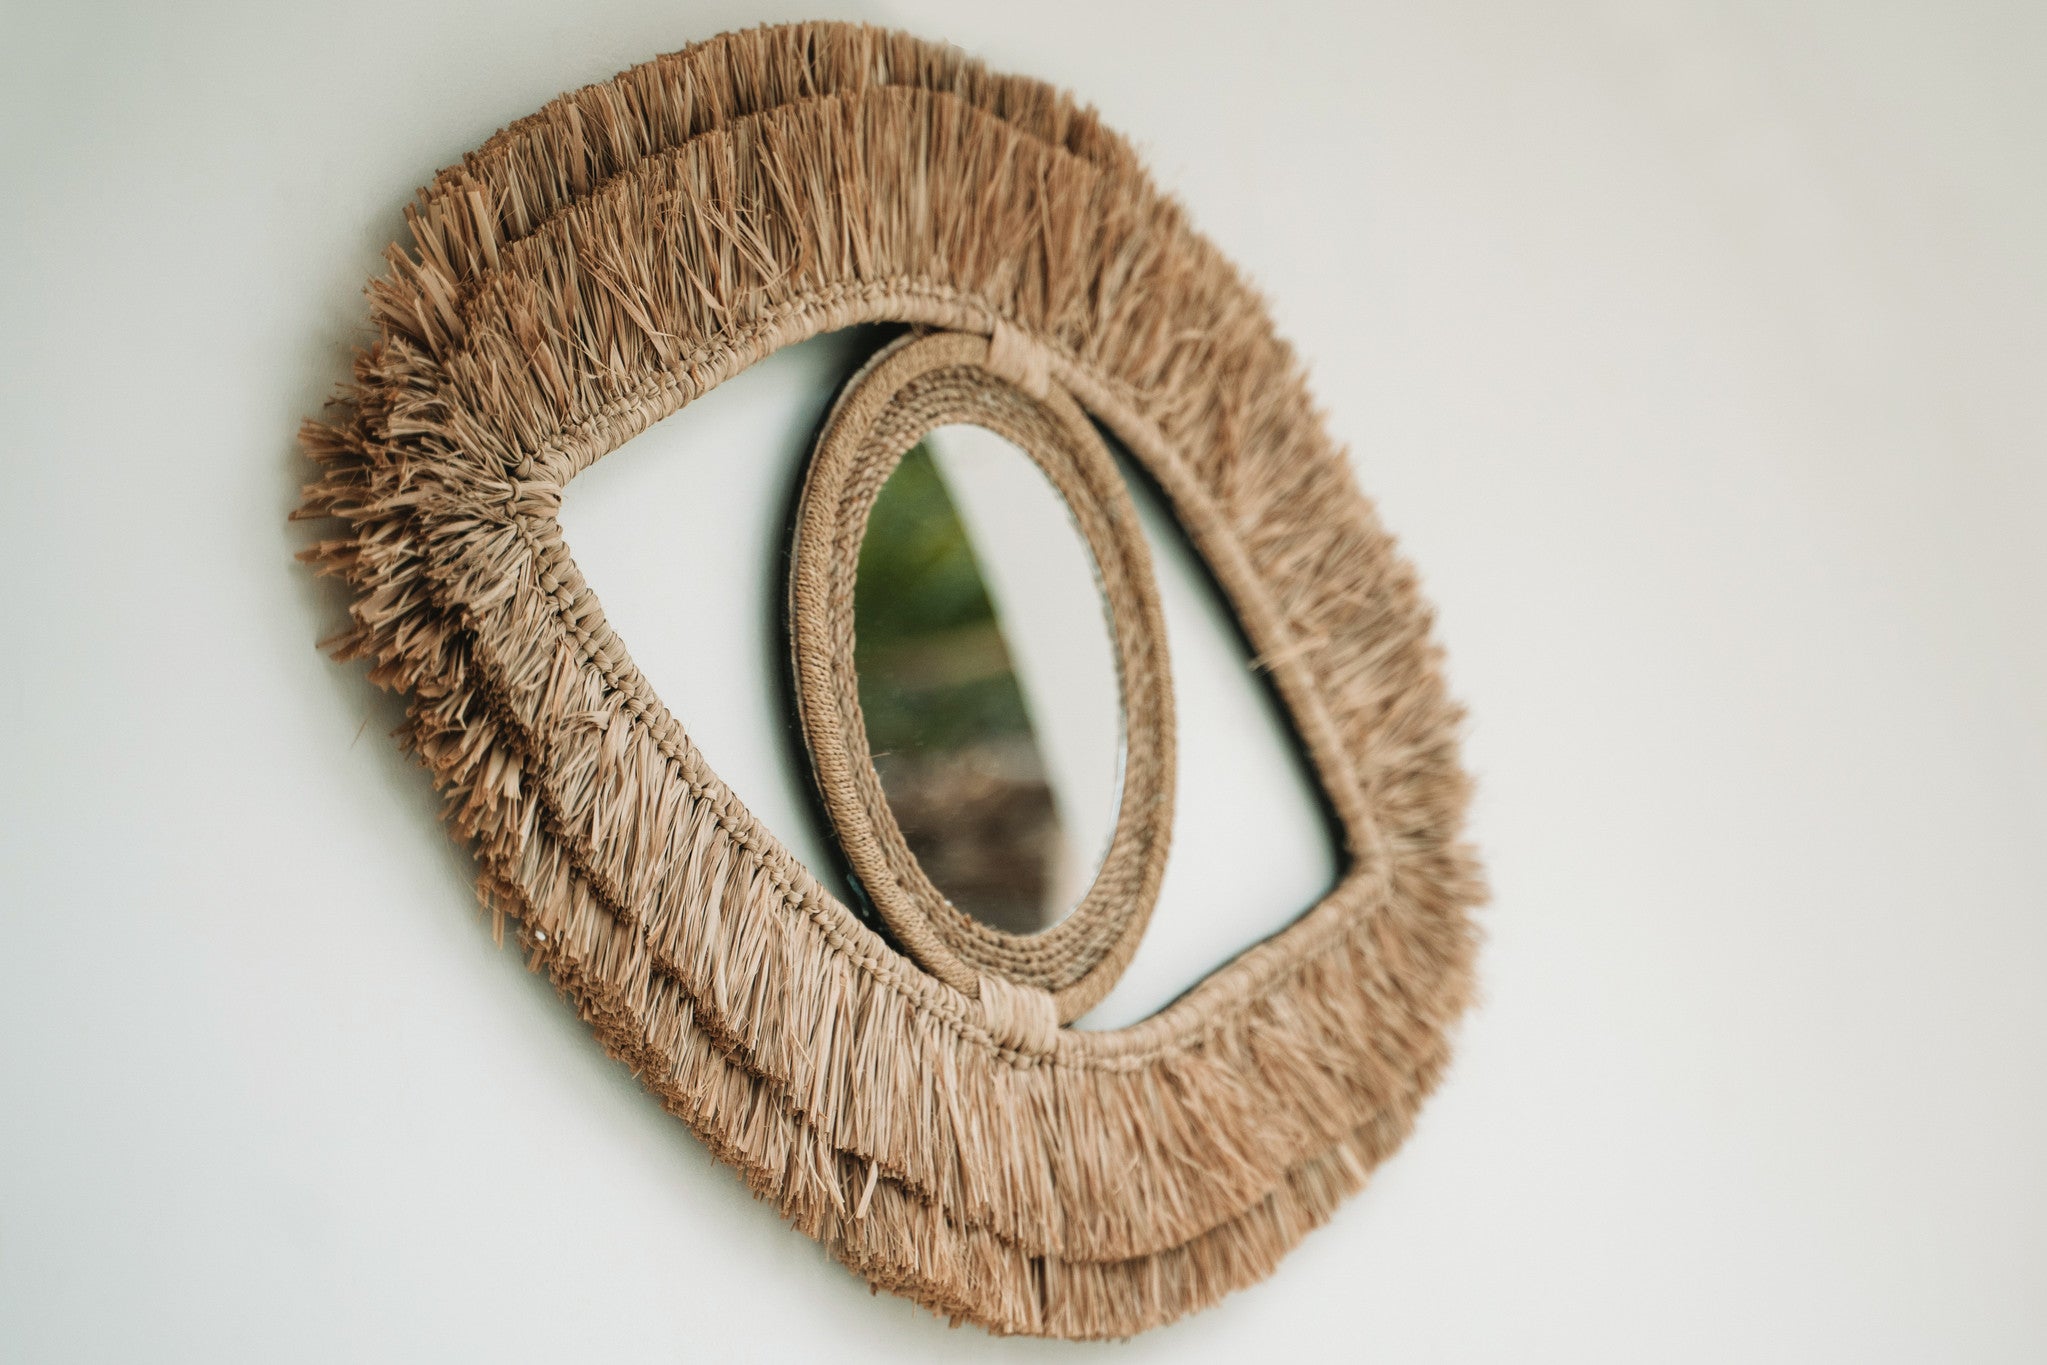 Raffia Eye Mirror - Natural - M